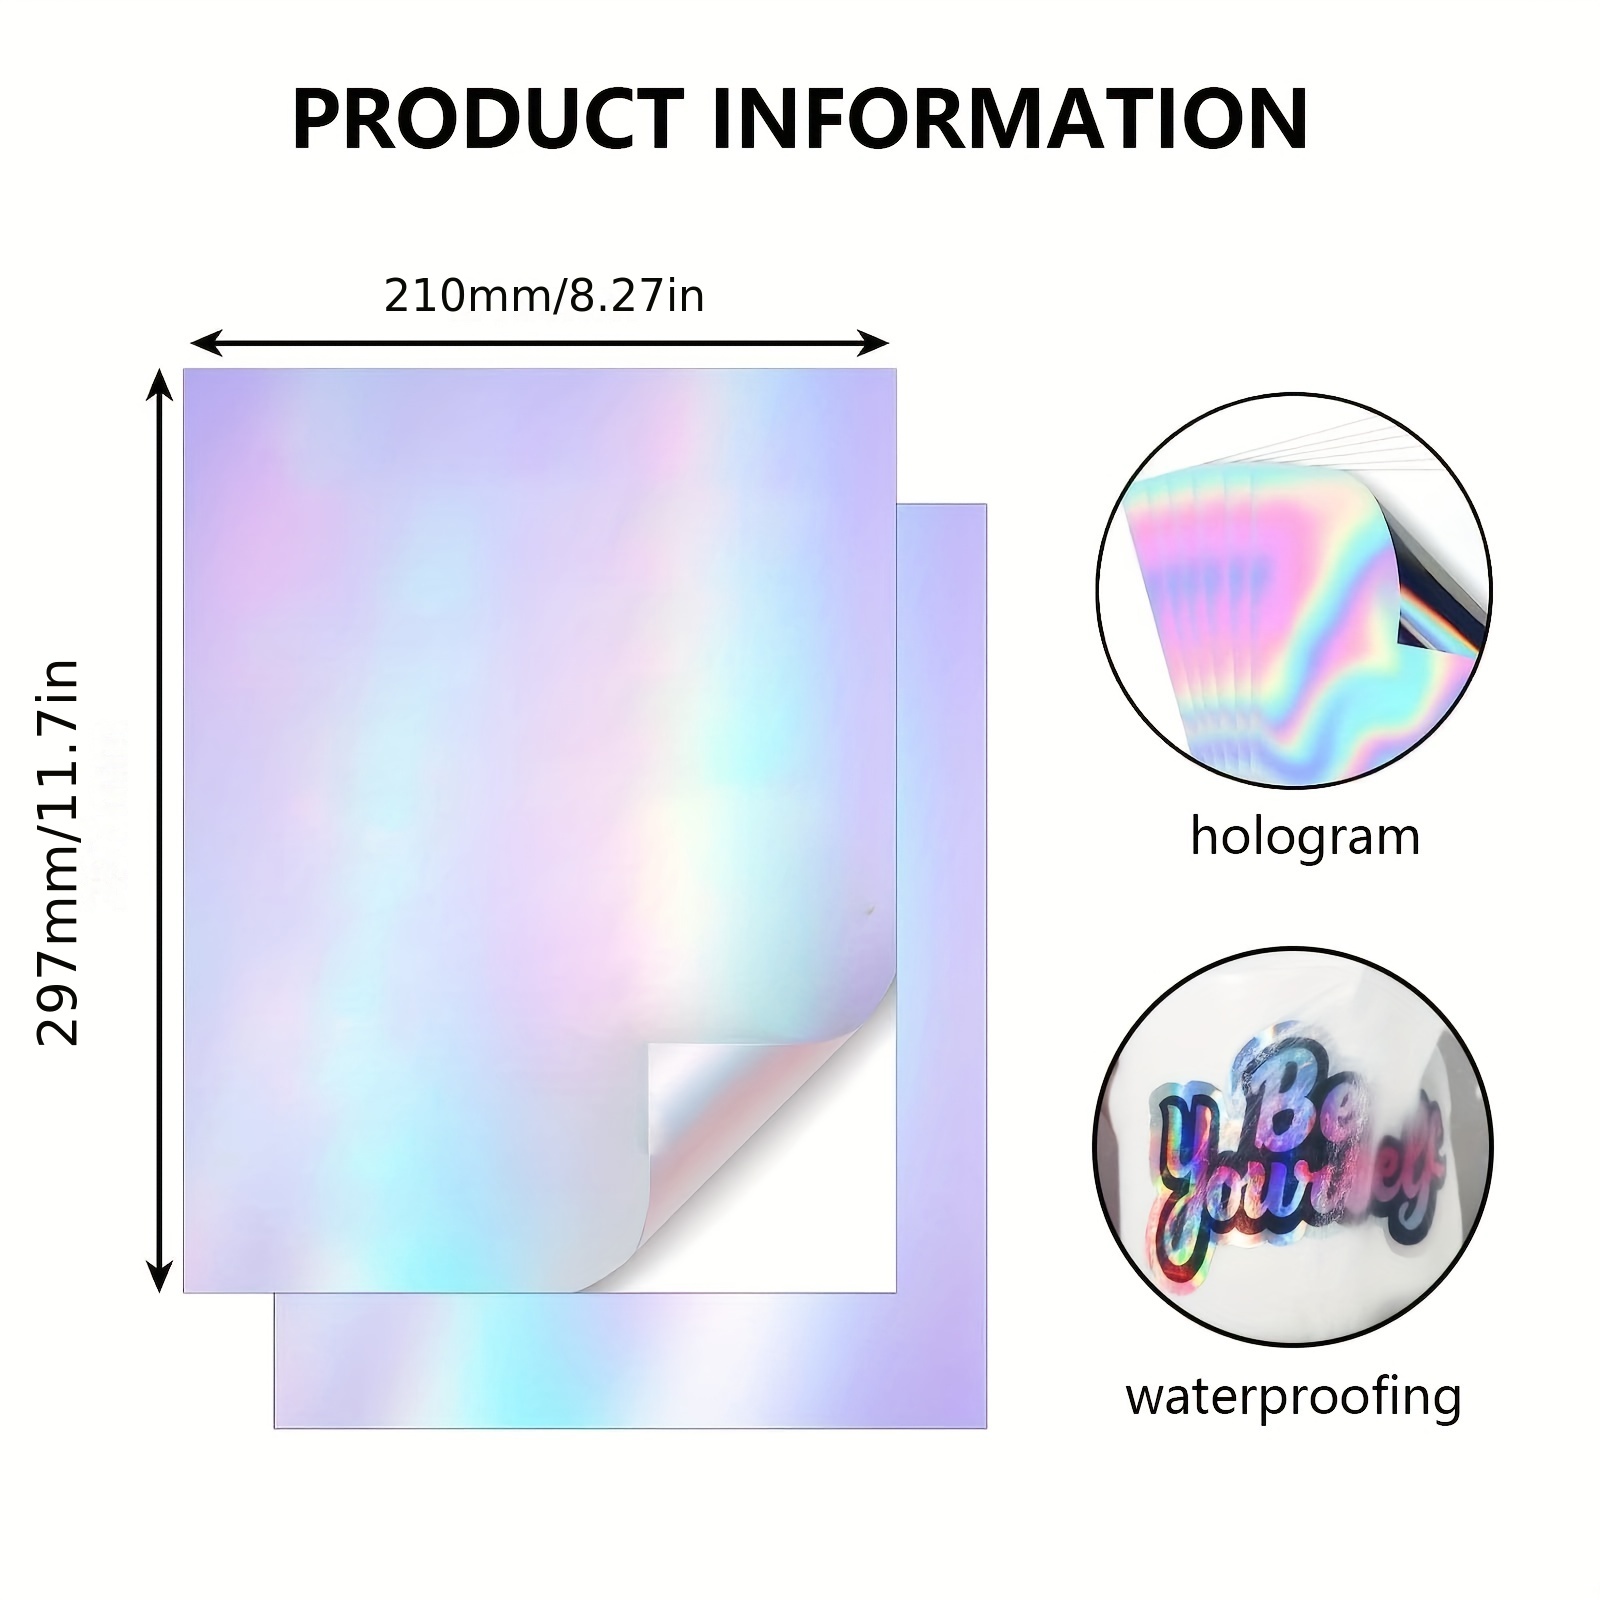 Sticker Paper Inkjet Holographic